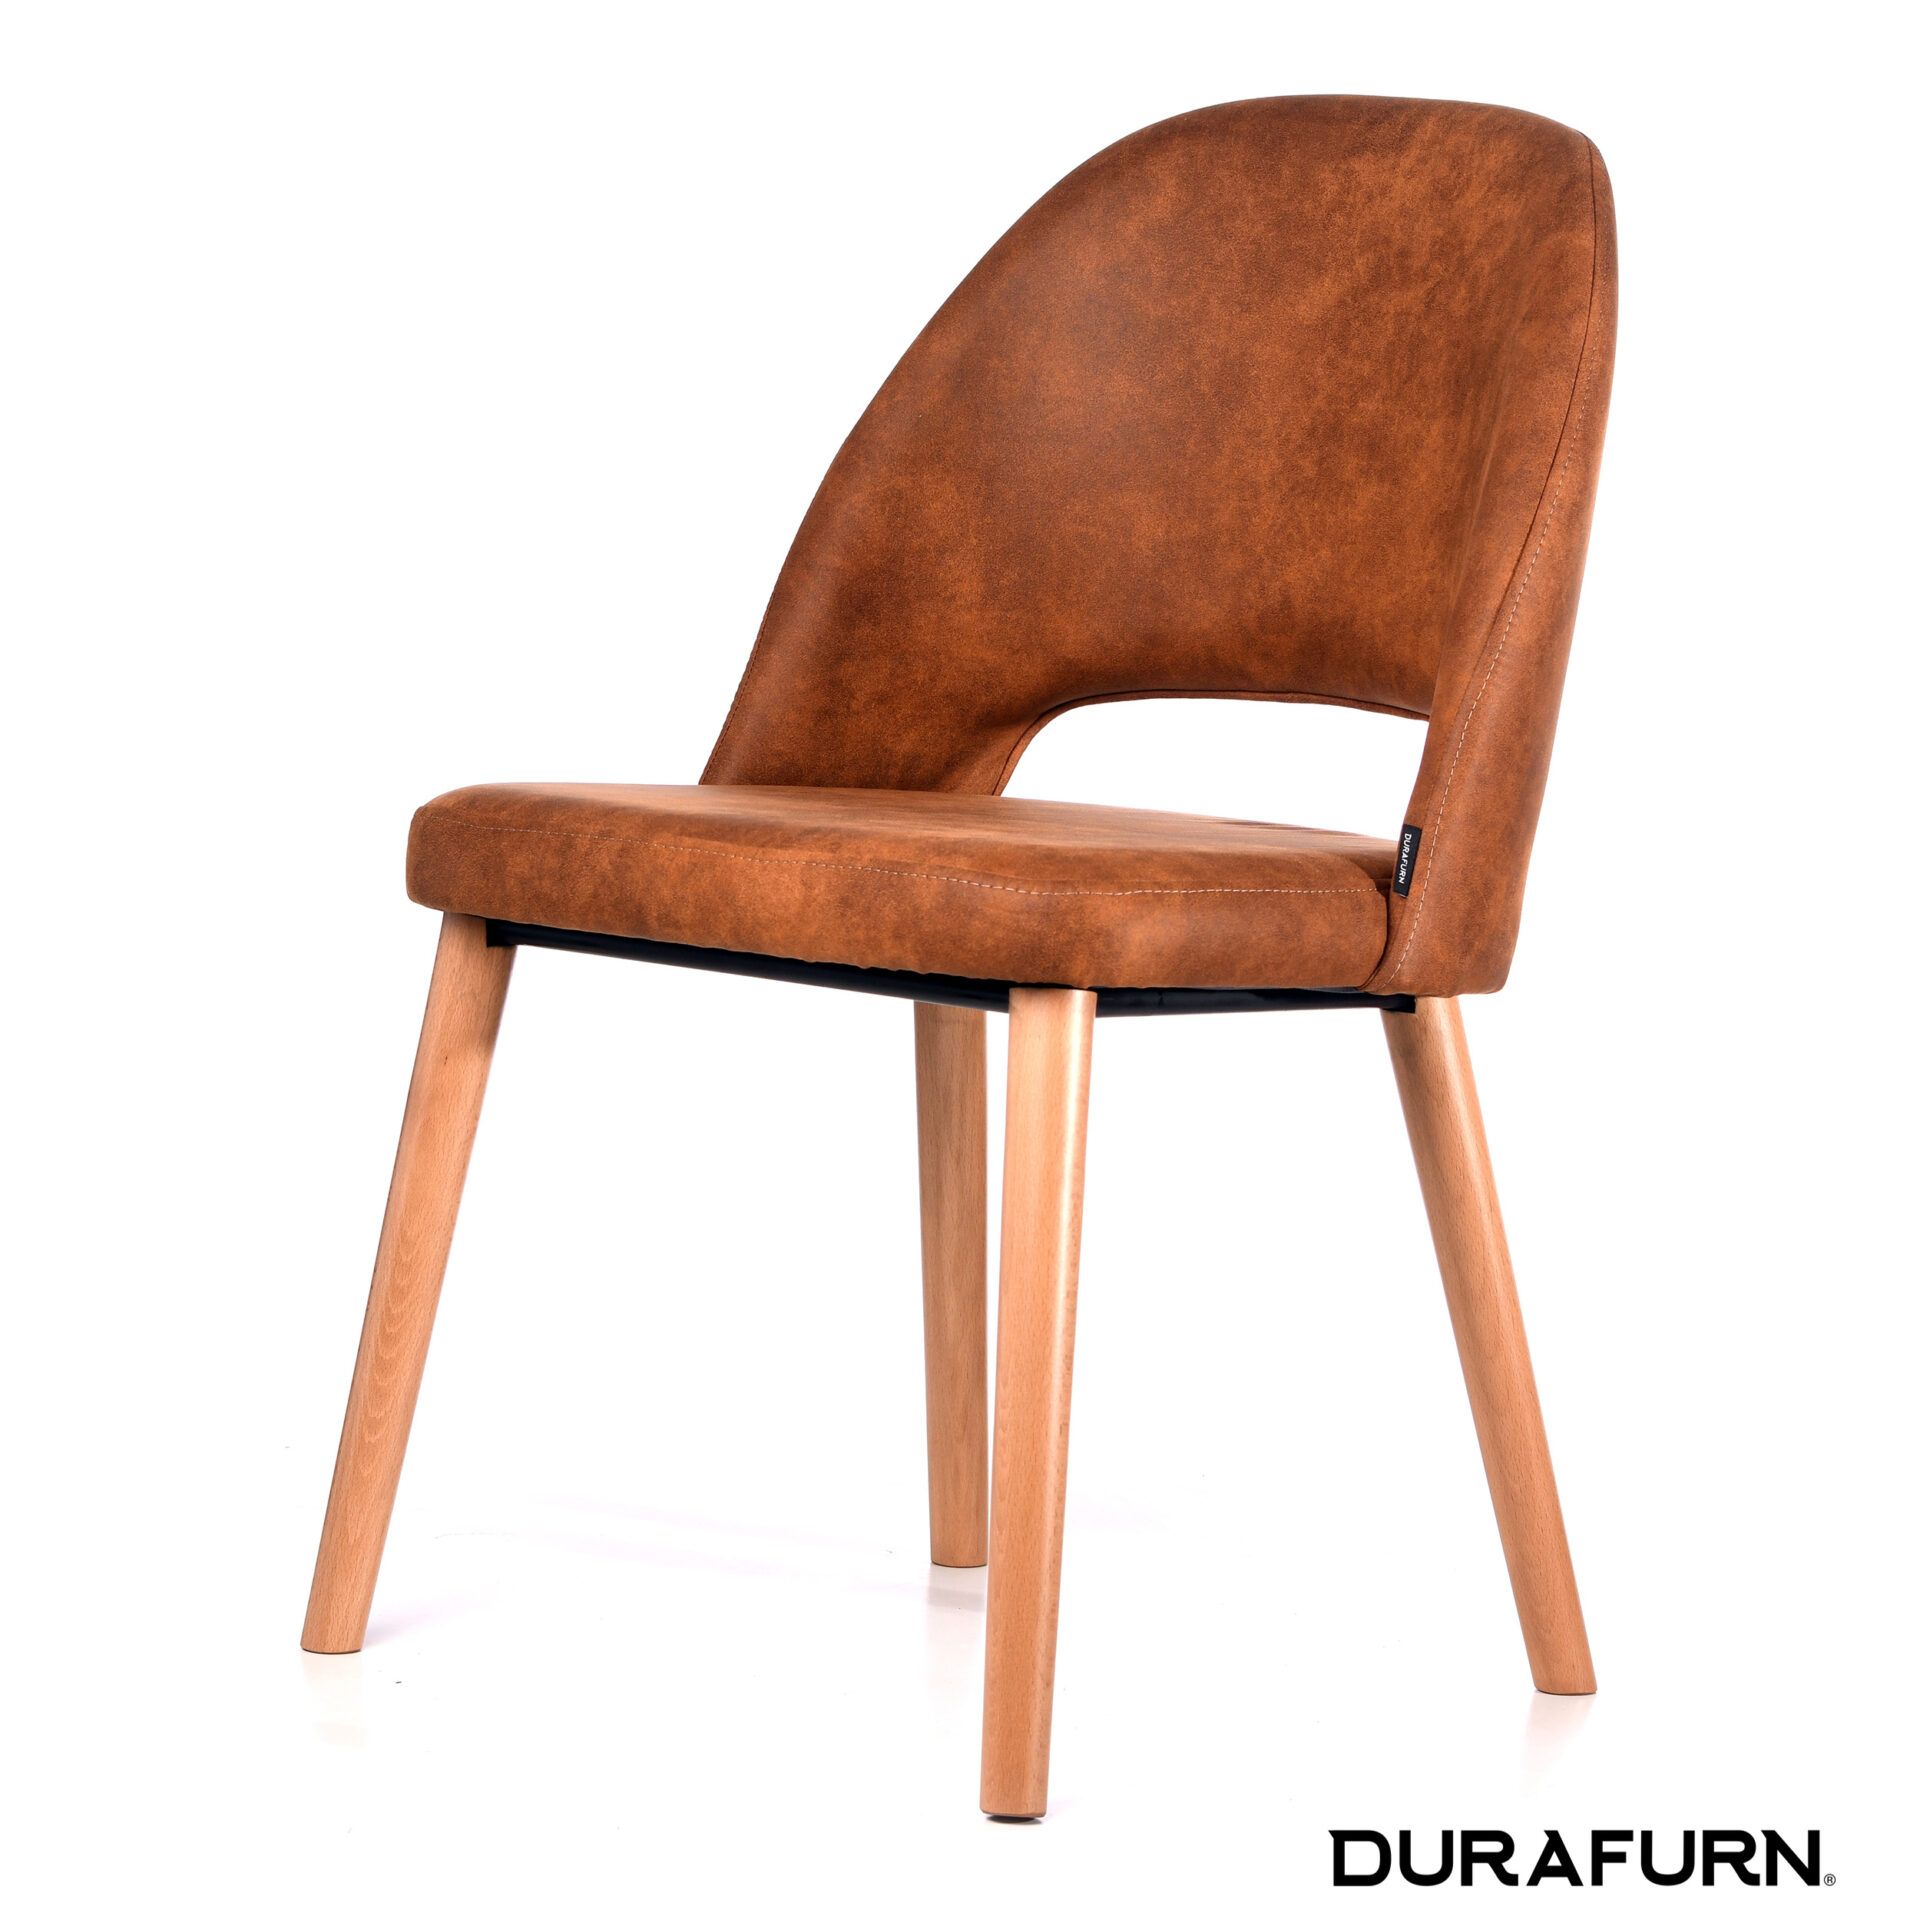 Semifreddo Chair - Trojan Oak Legs/Tan Fabric